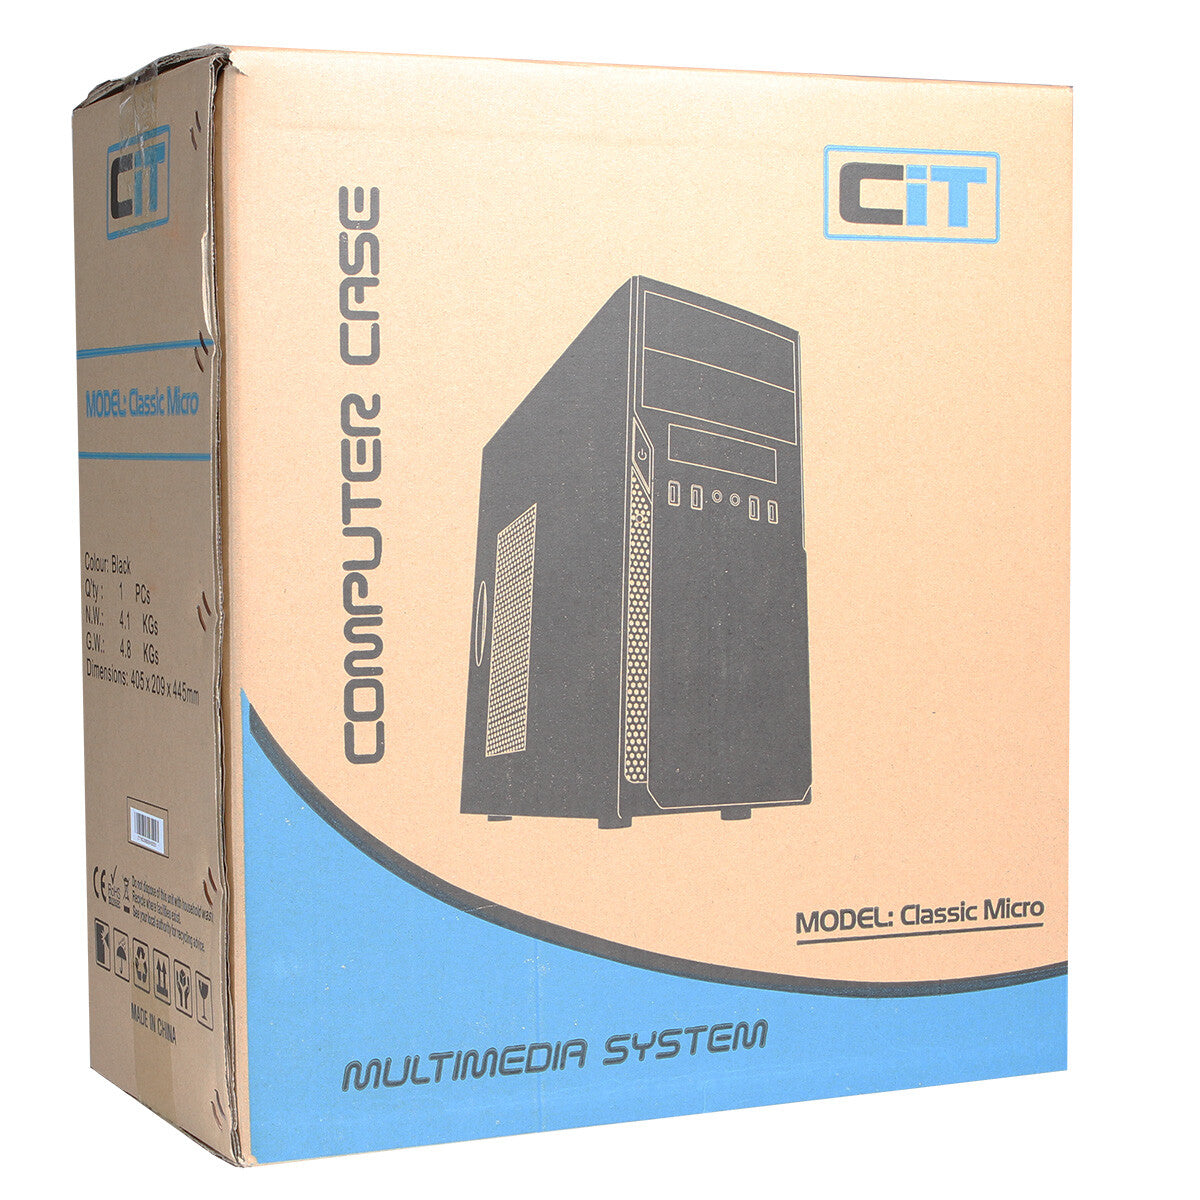 CiT CLASSIC MICRO - MicroATX Mid Tower Case in Black w/ 500W PSU